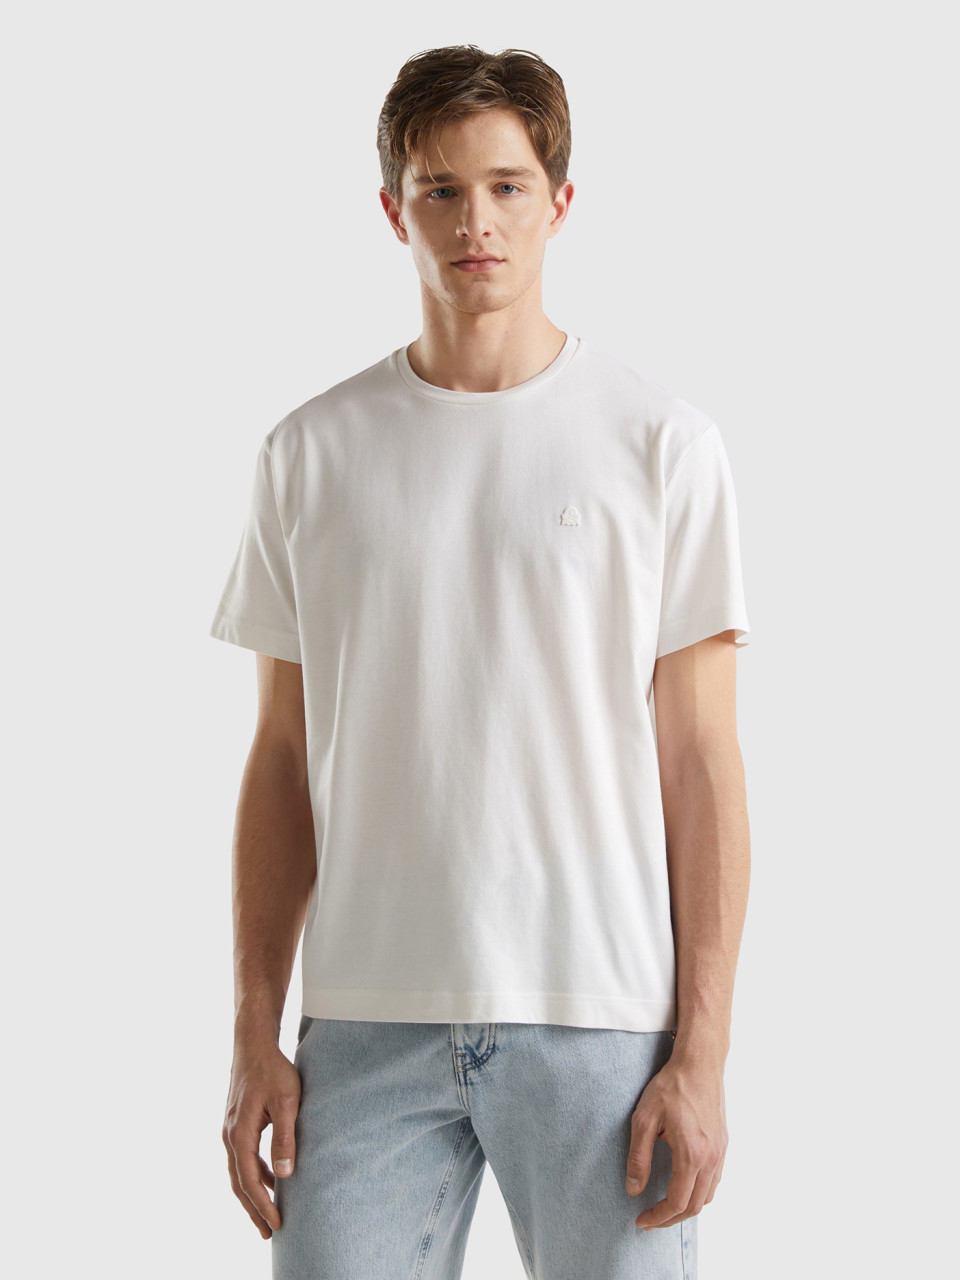 Benetton, T-shirt In Micro Pique, White, Men